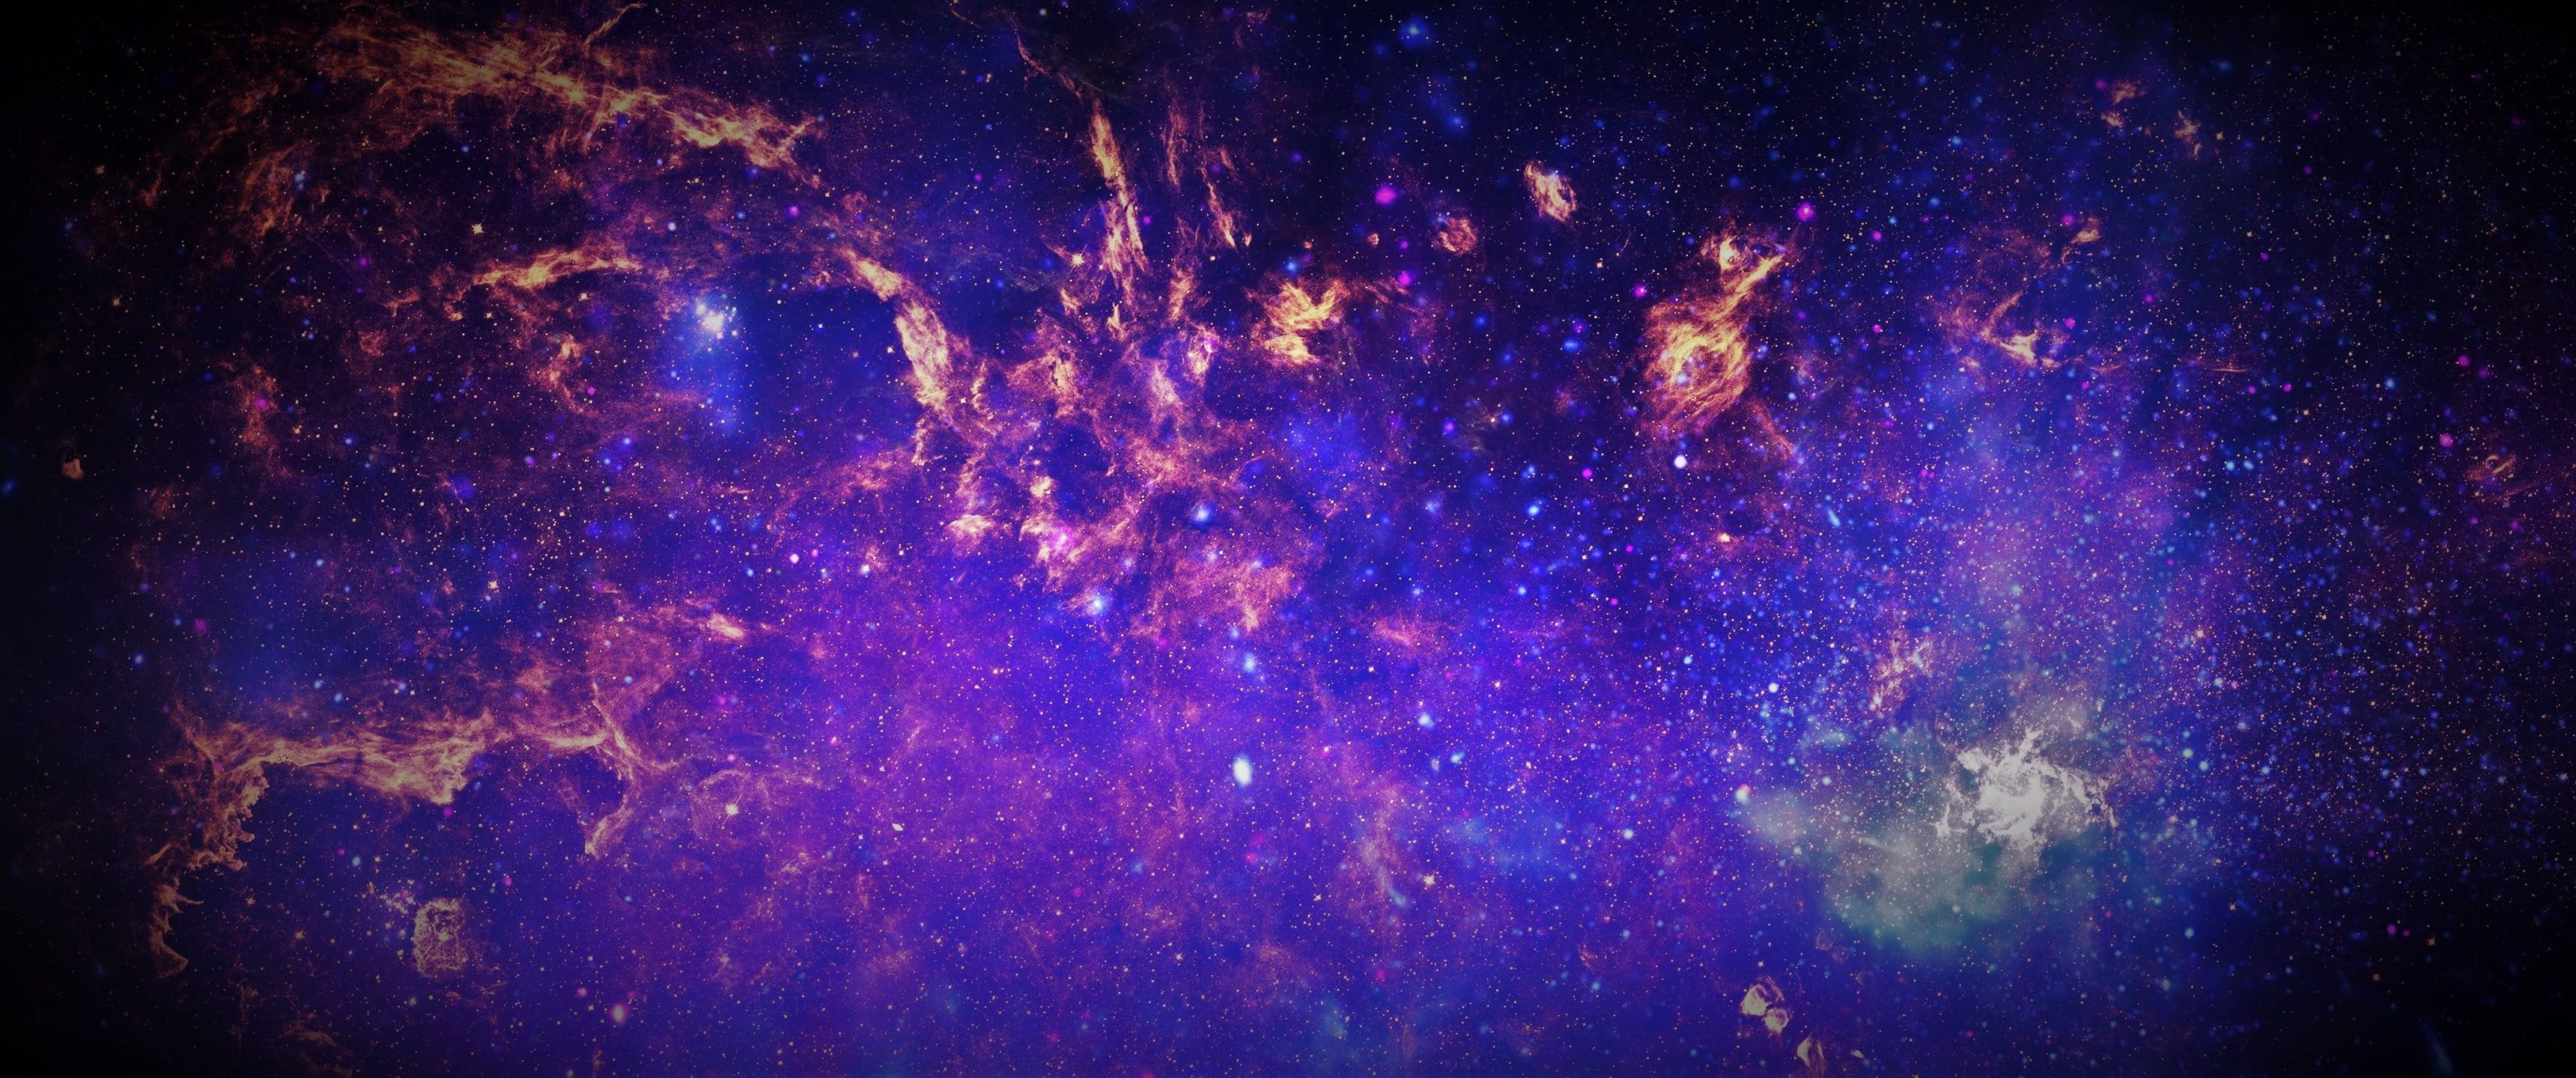 purple and orange galaxy #galaxy #stars #sky #blue #planet #space space art K #wallpaper #hdwallpaper #desktop. Space art, 3440x1440 wallpaper, HD wallpaper